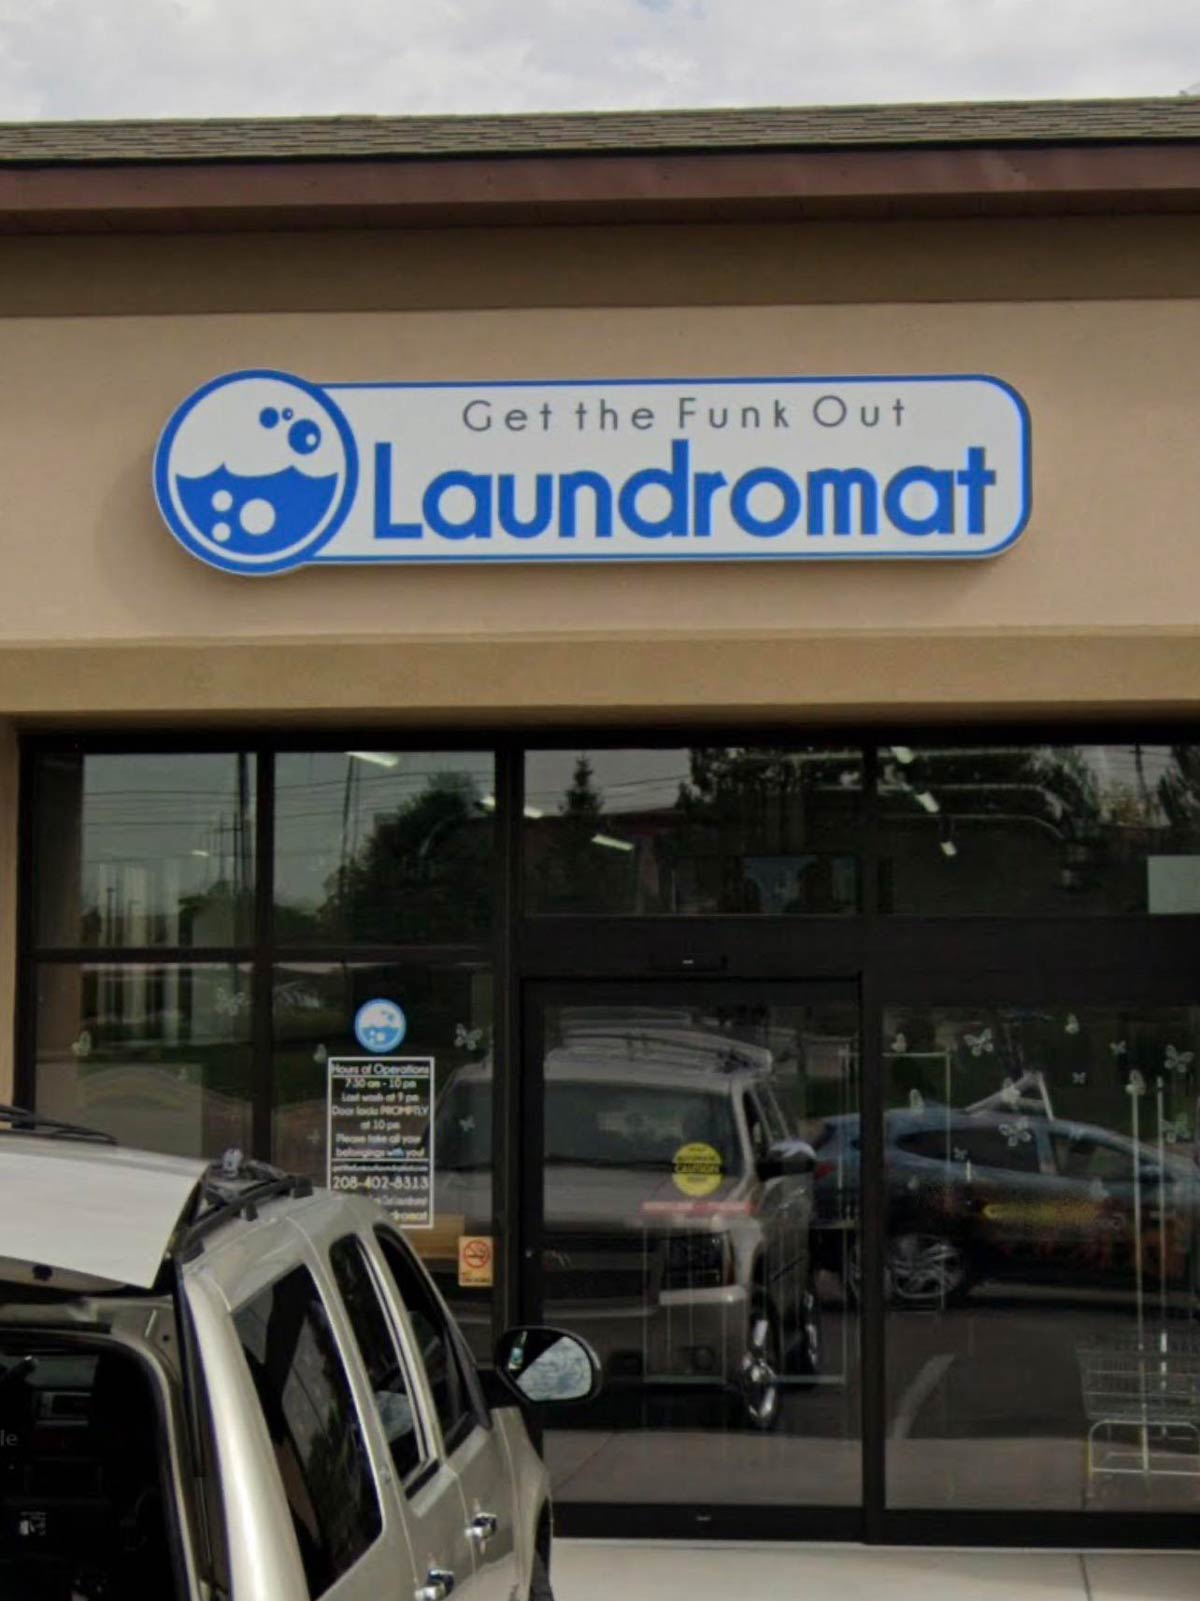 This laundromat